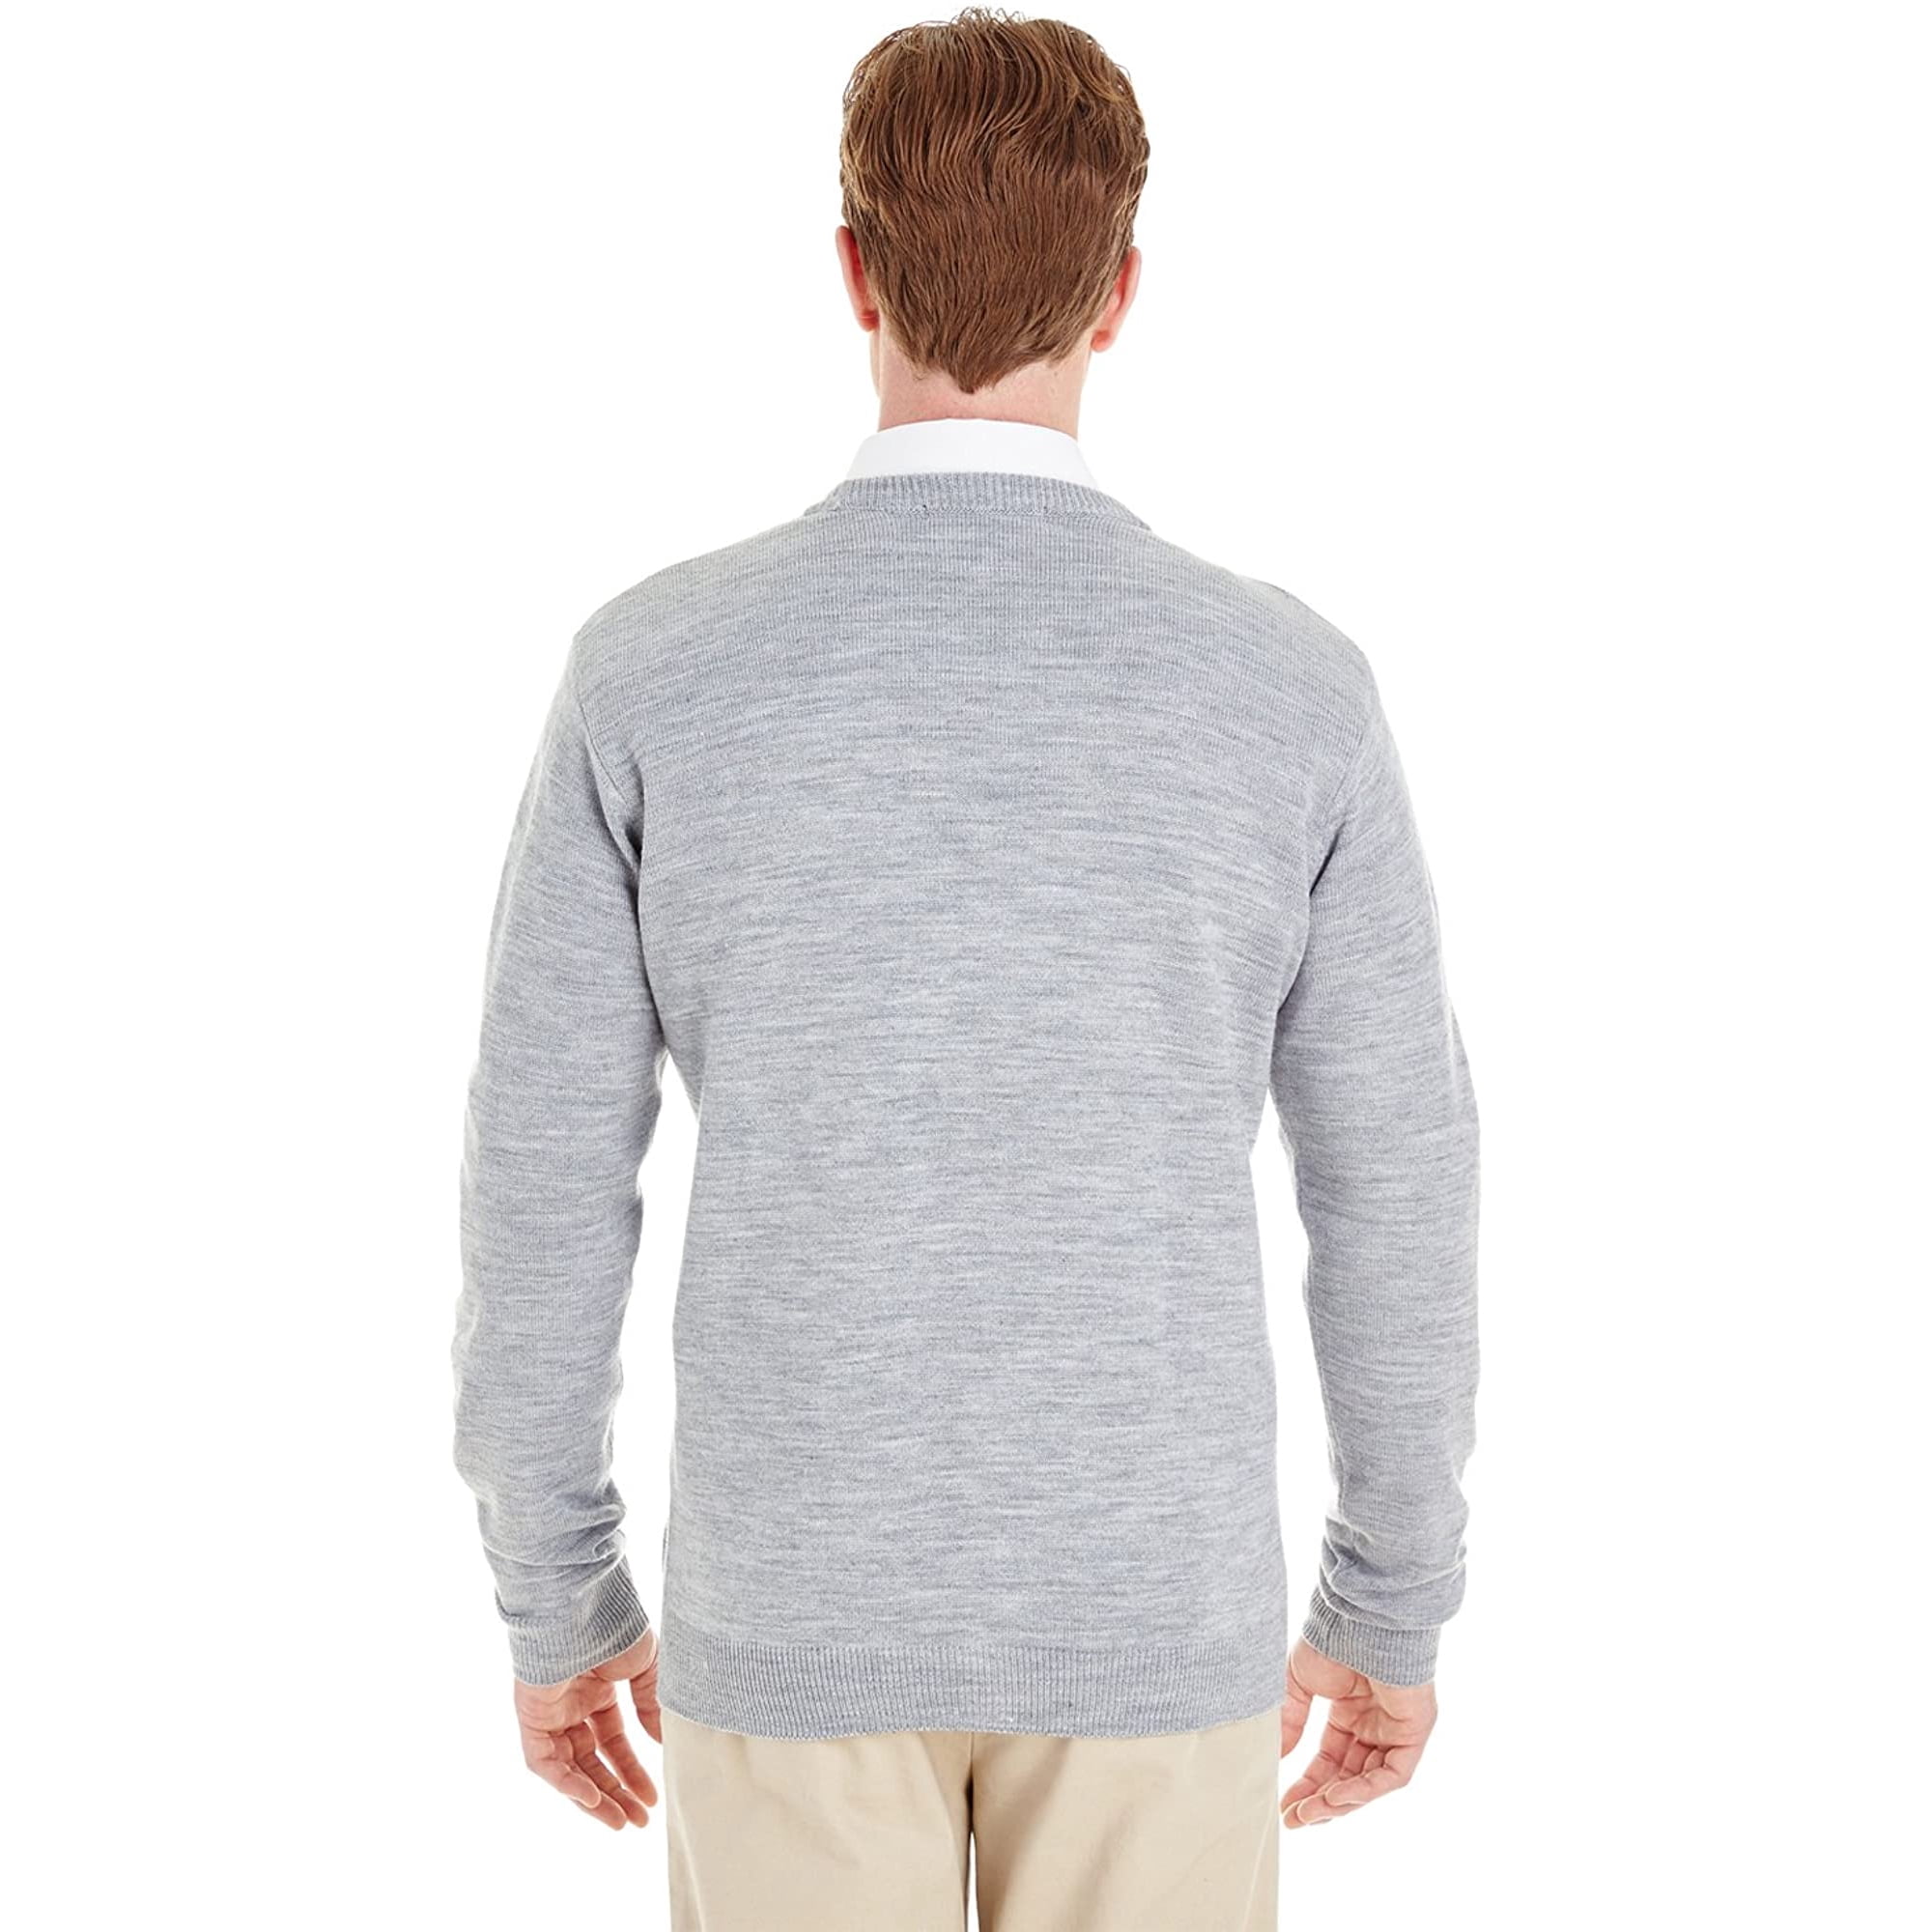 Harriton Men/'s Pilbloc V-Neck Button Cardigan Sweater